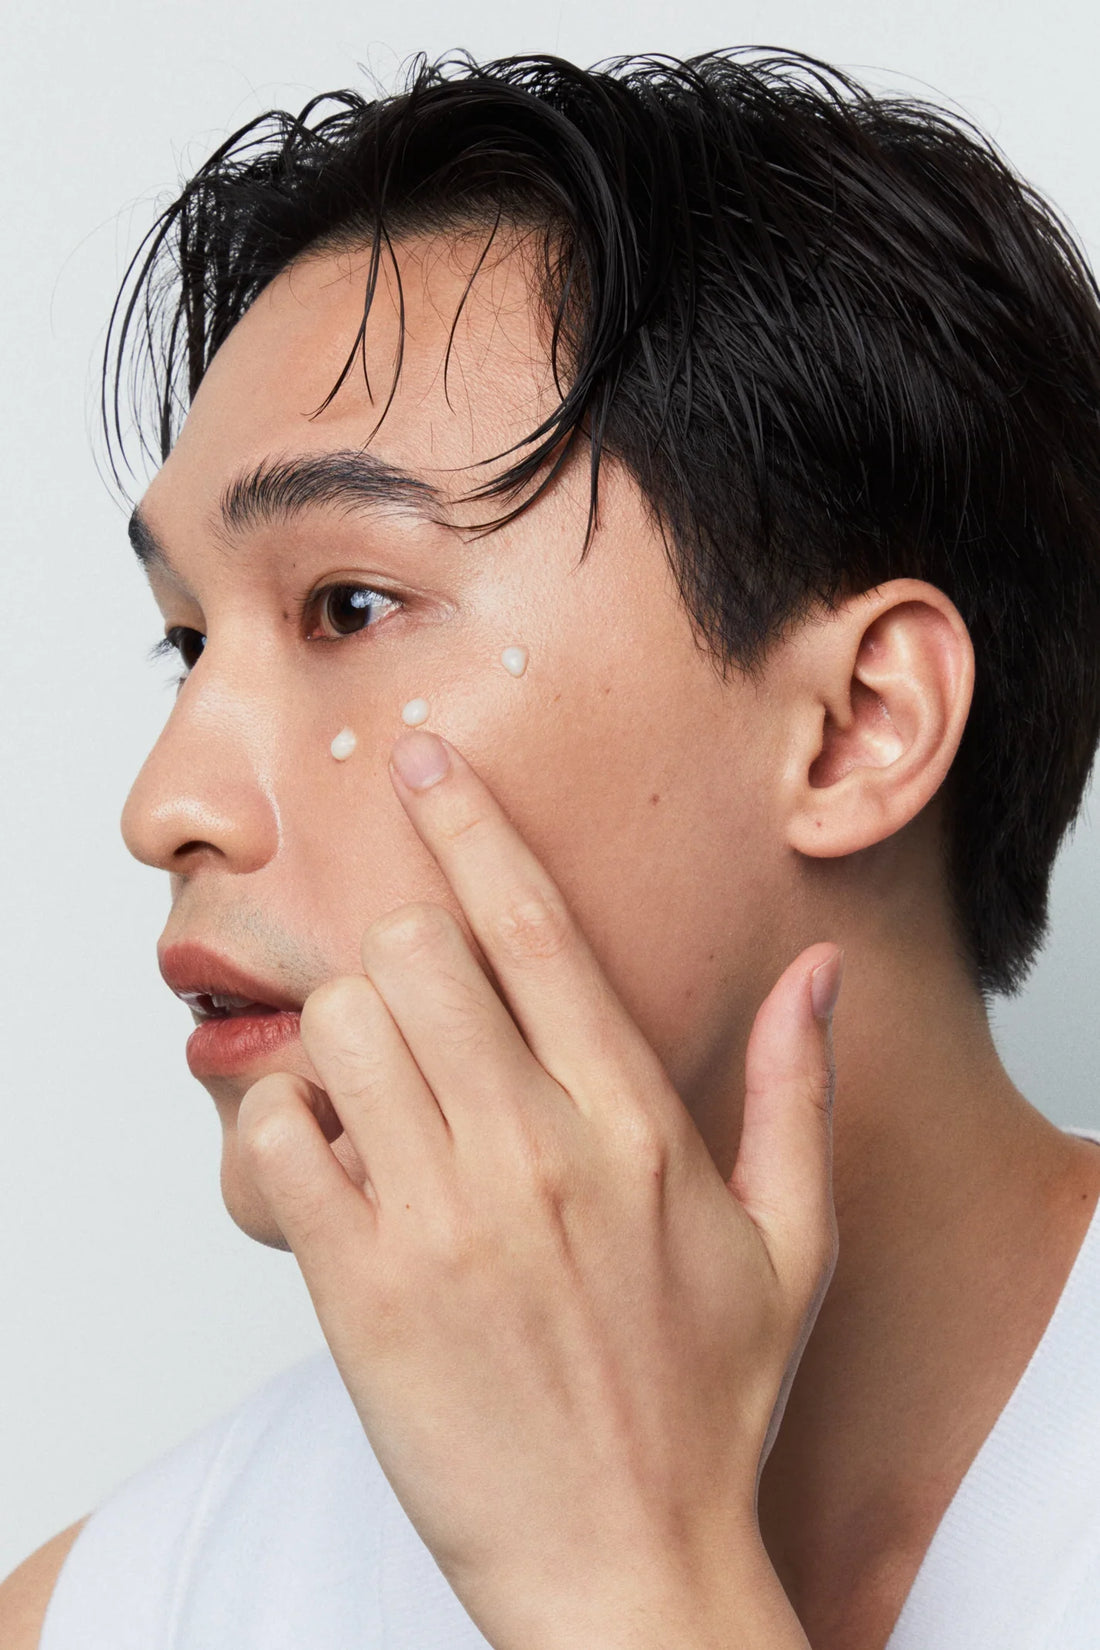 Image of an Asian man applying NAIIAN Beauty's Eye and Face Serum to his cheeks 